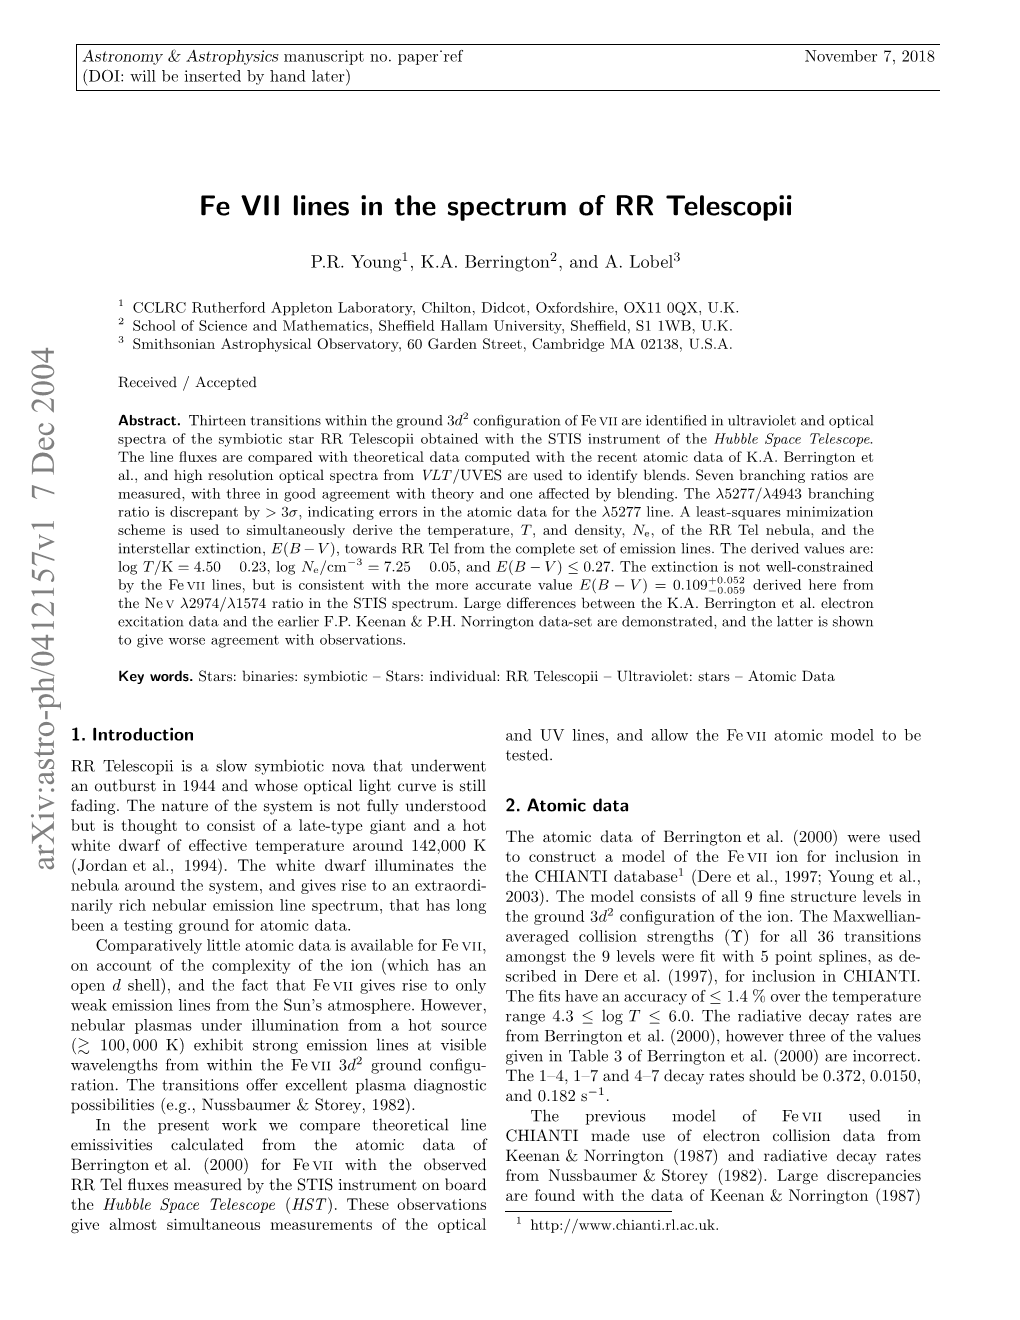 Fe VII Lines in the Spectrum of RR Telescopii